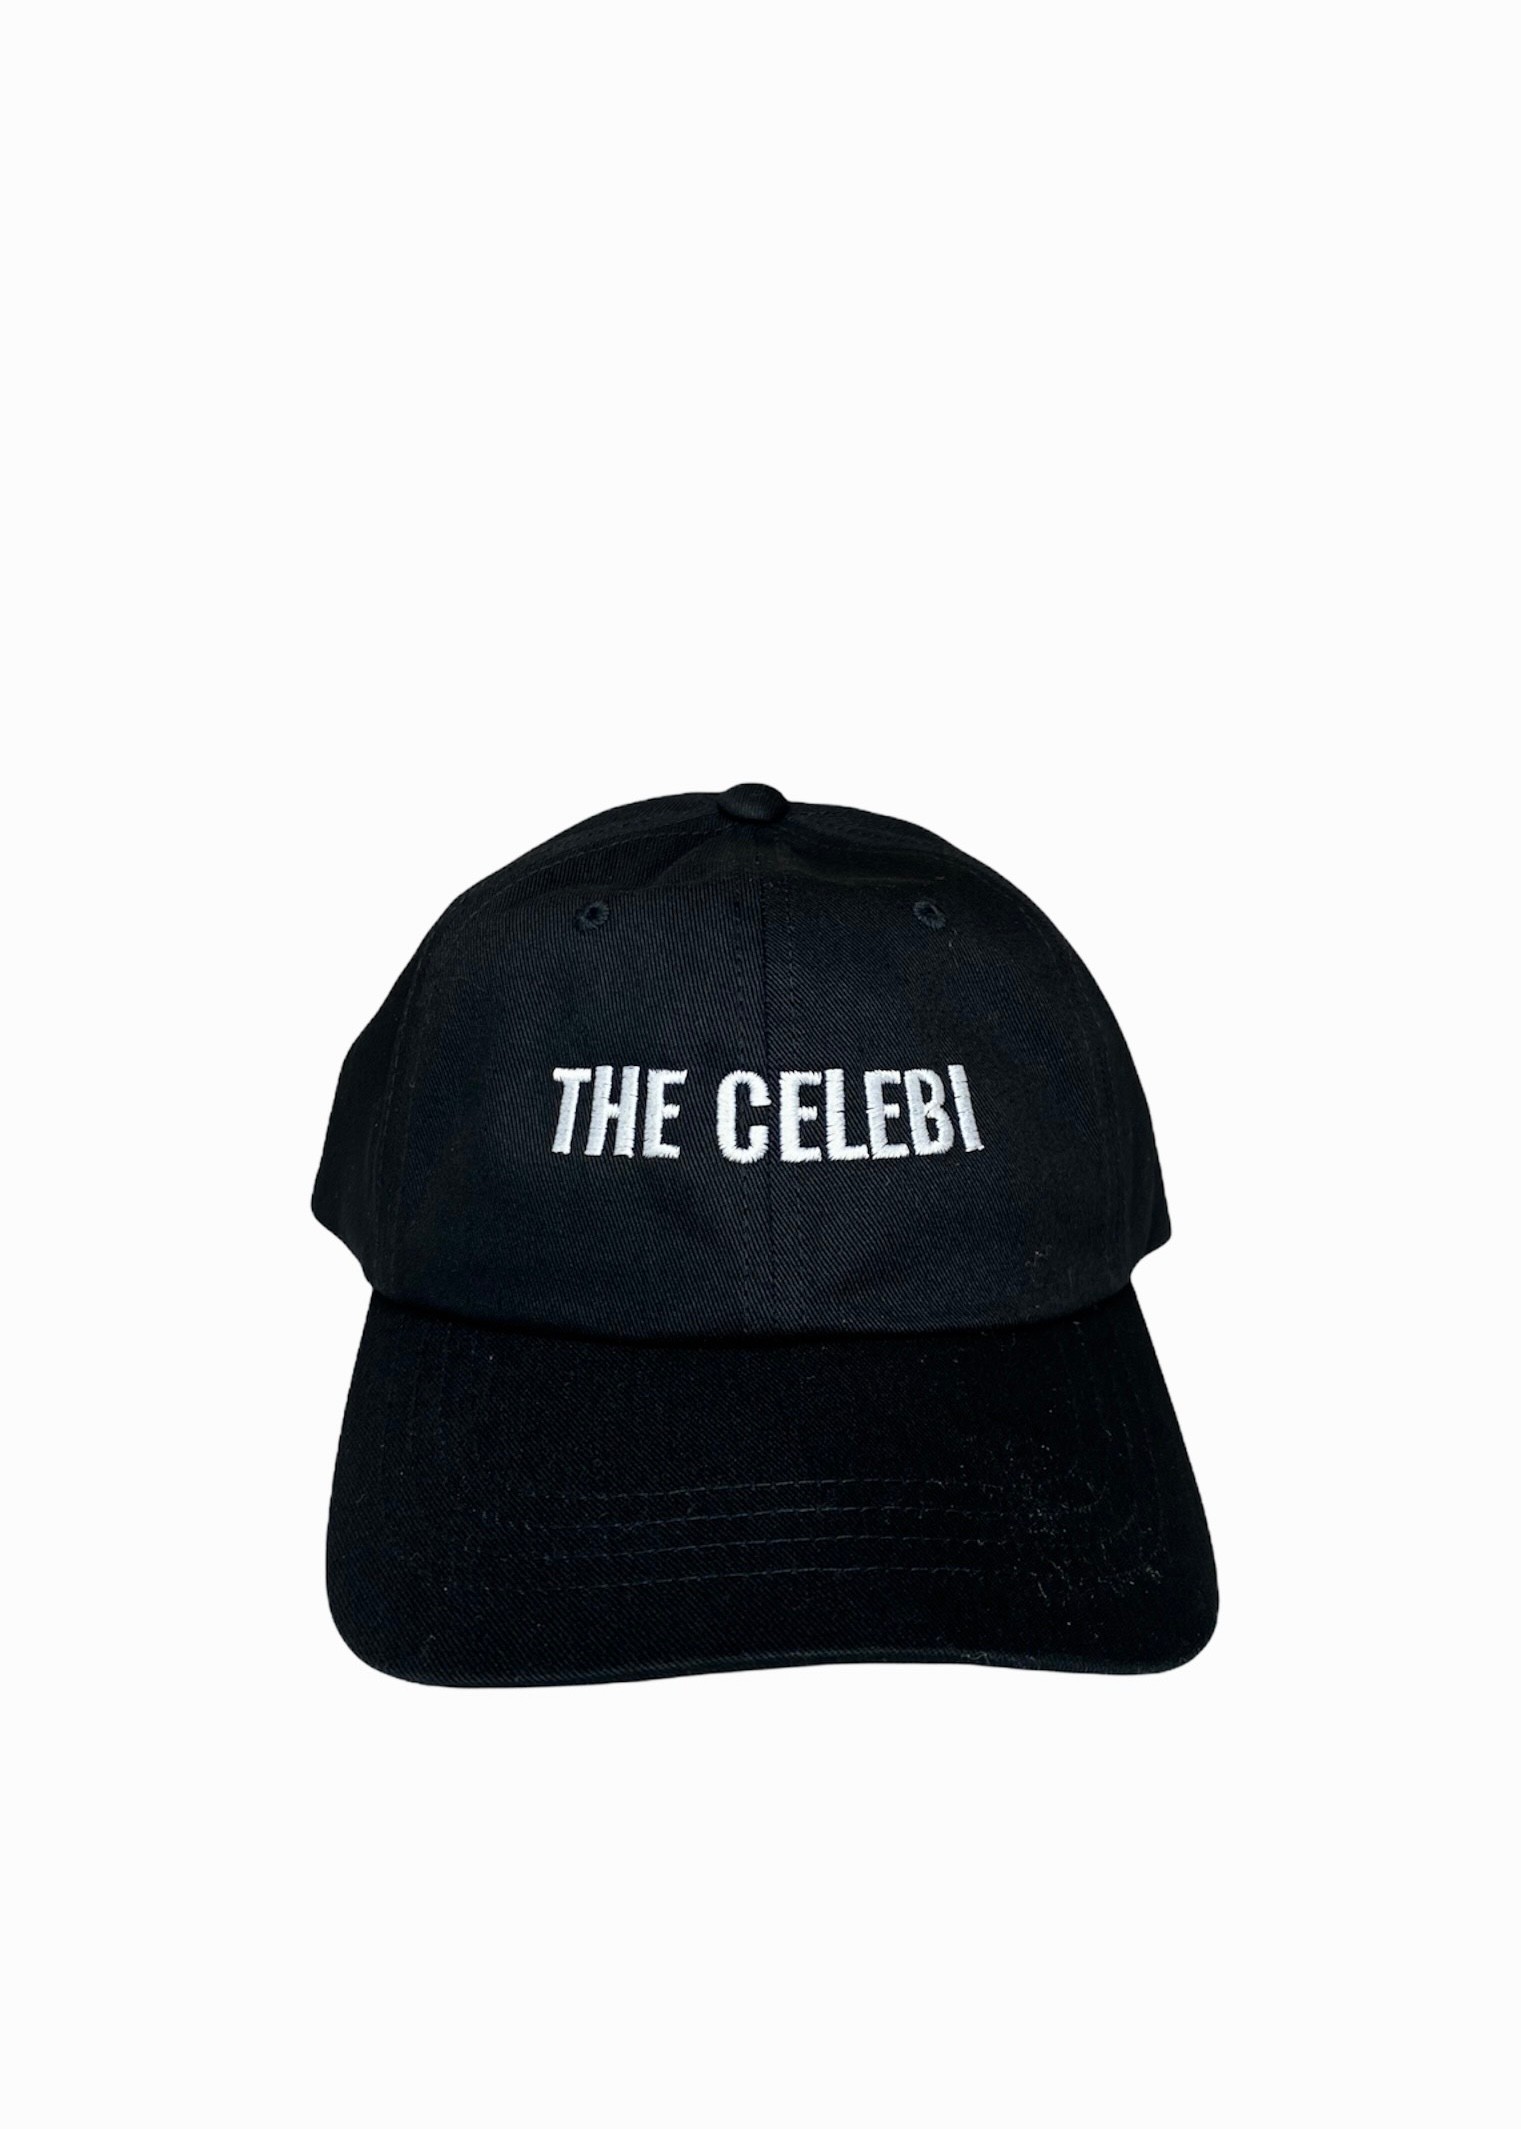 The Celebi cap